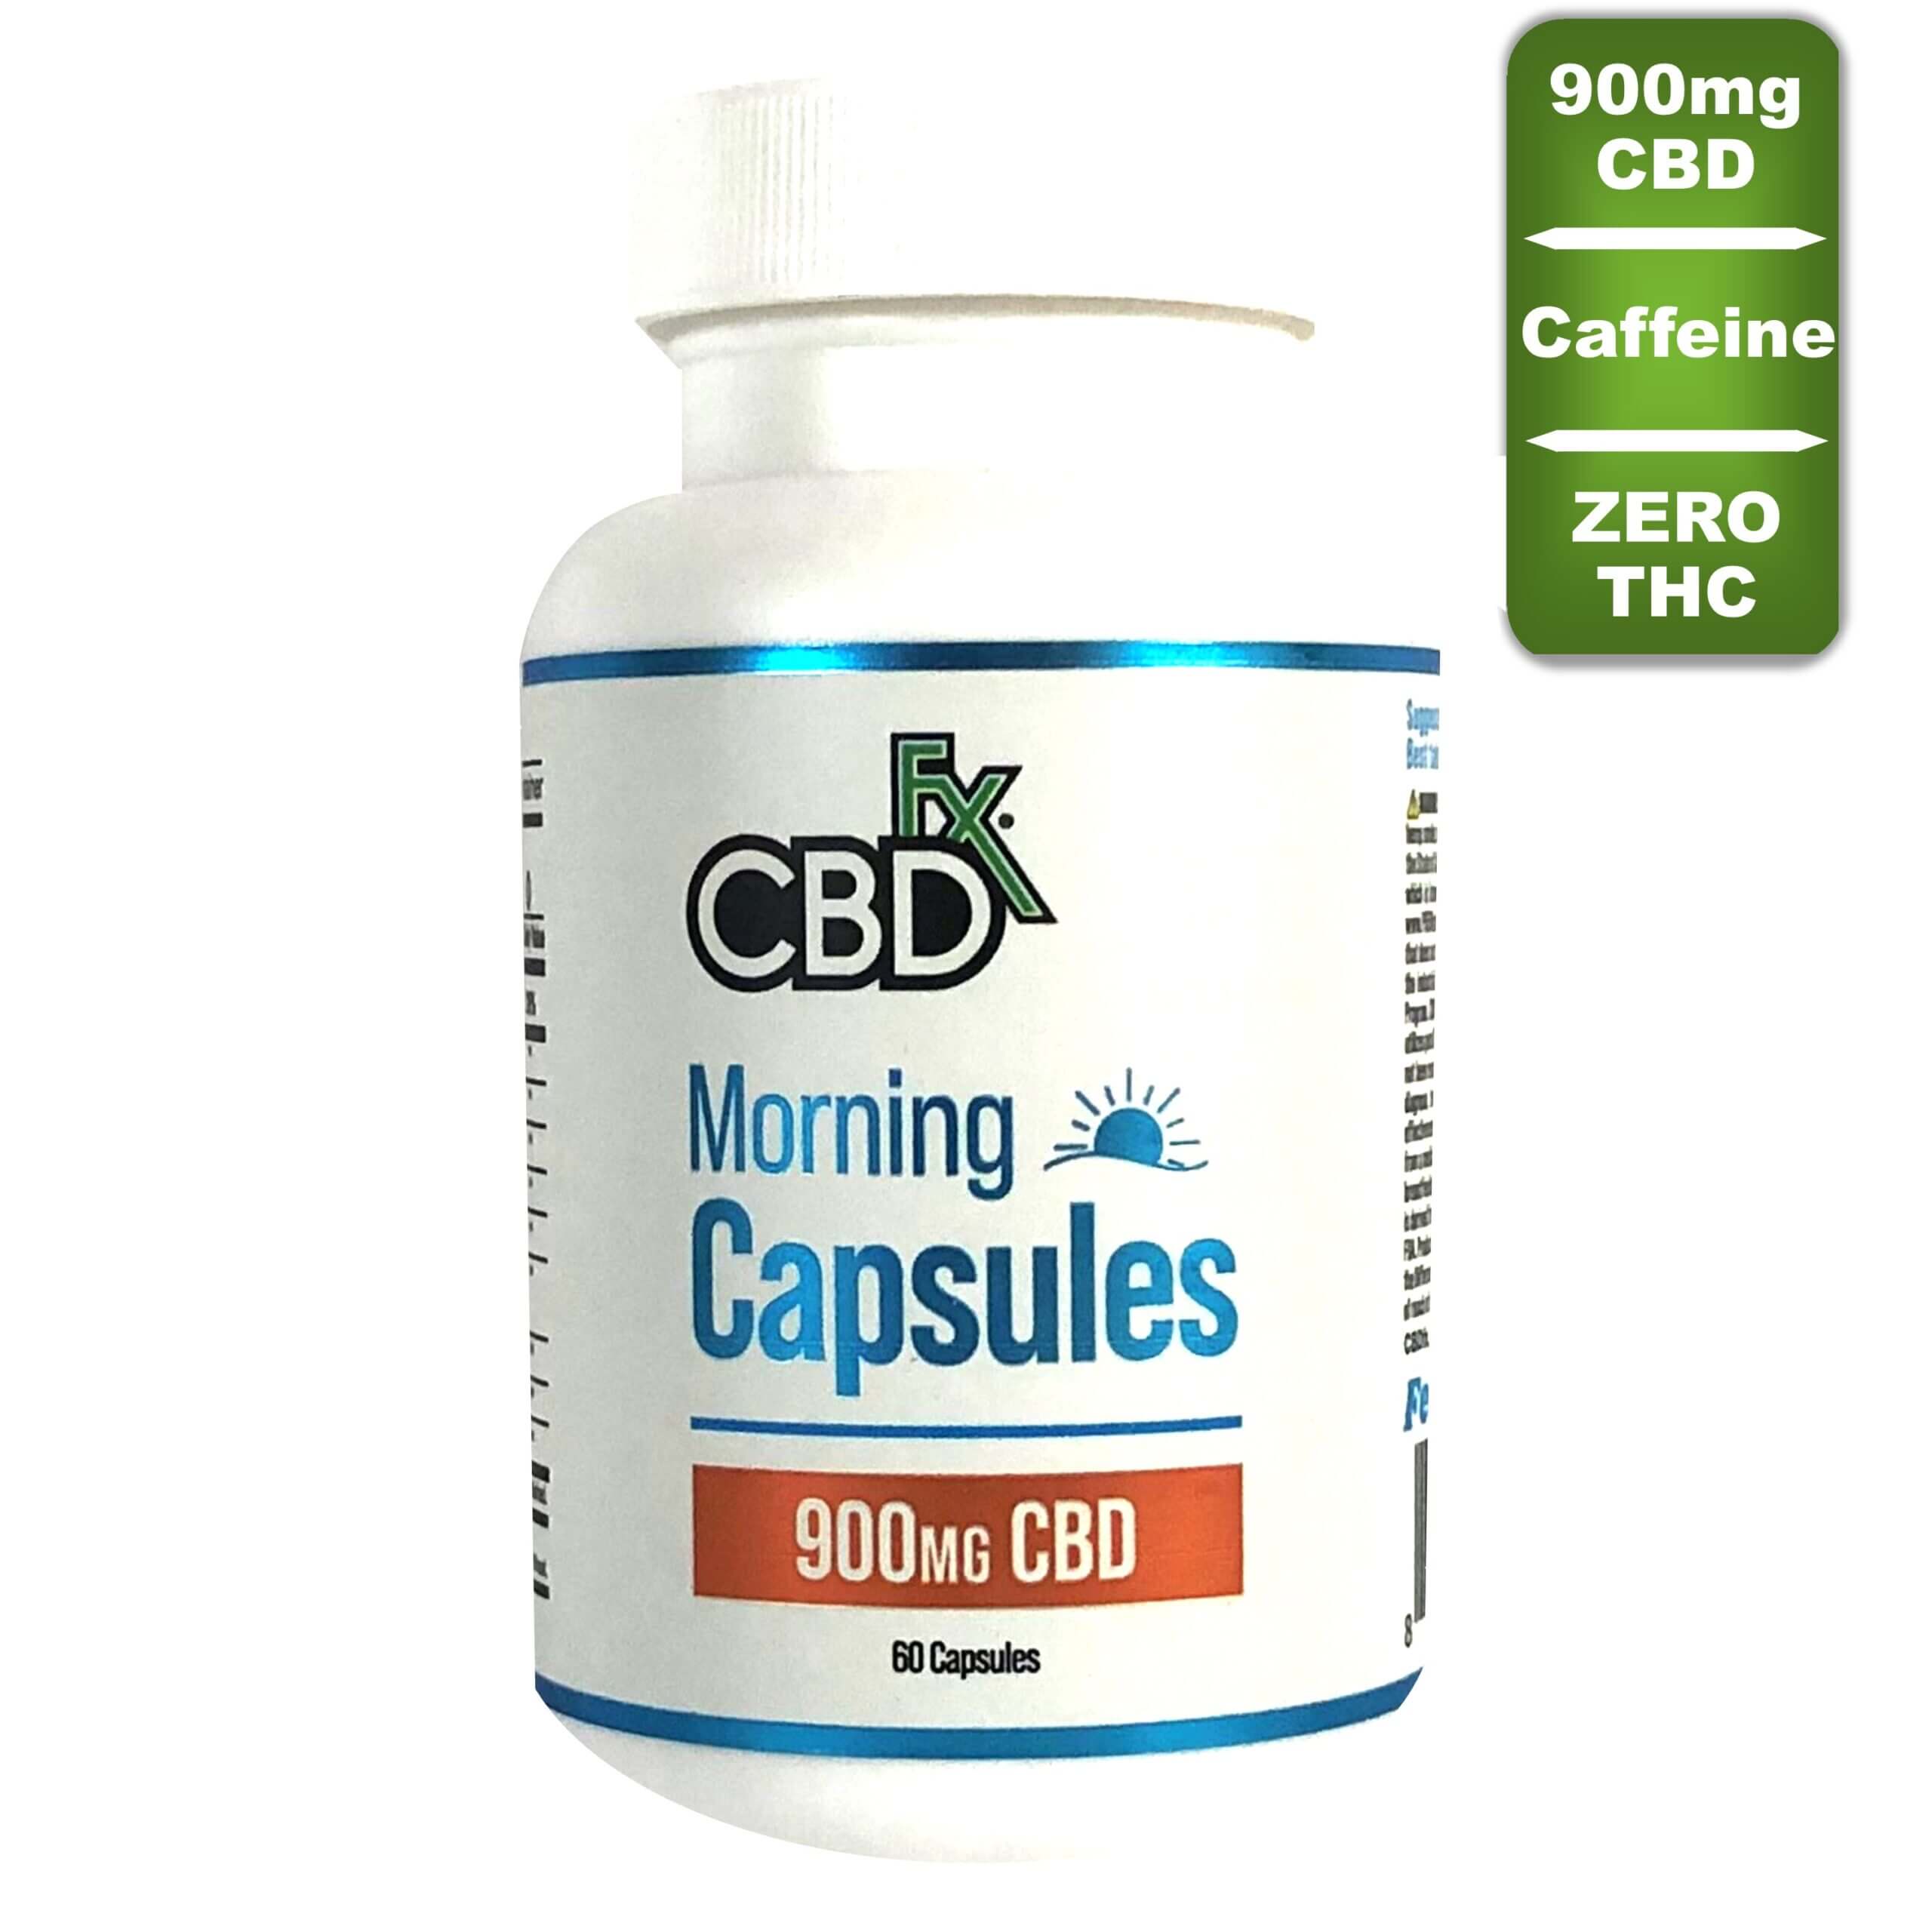 cbdfx, 900mg CBD + Caffeine capsules, broad spectrum